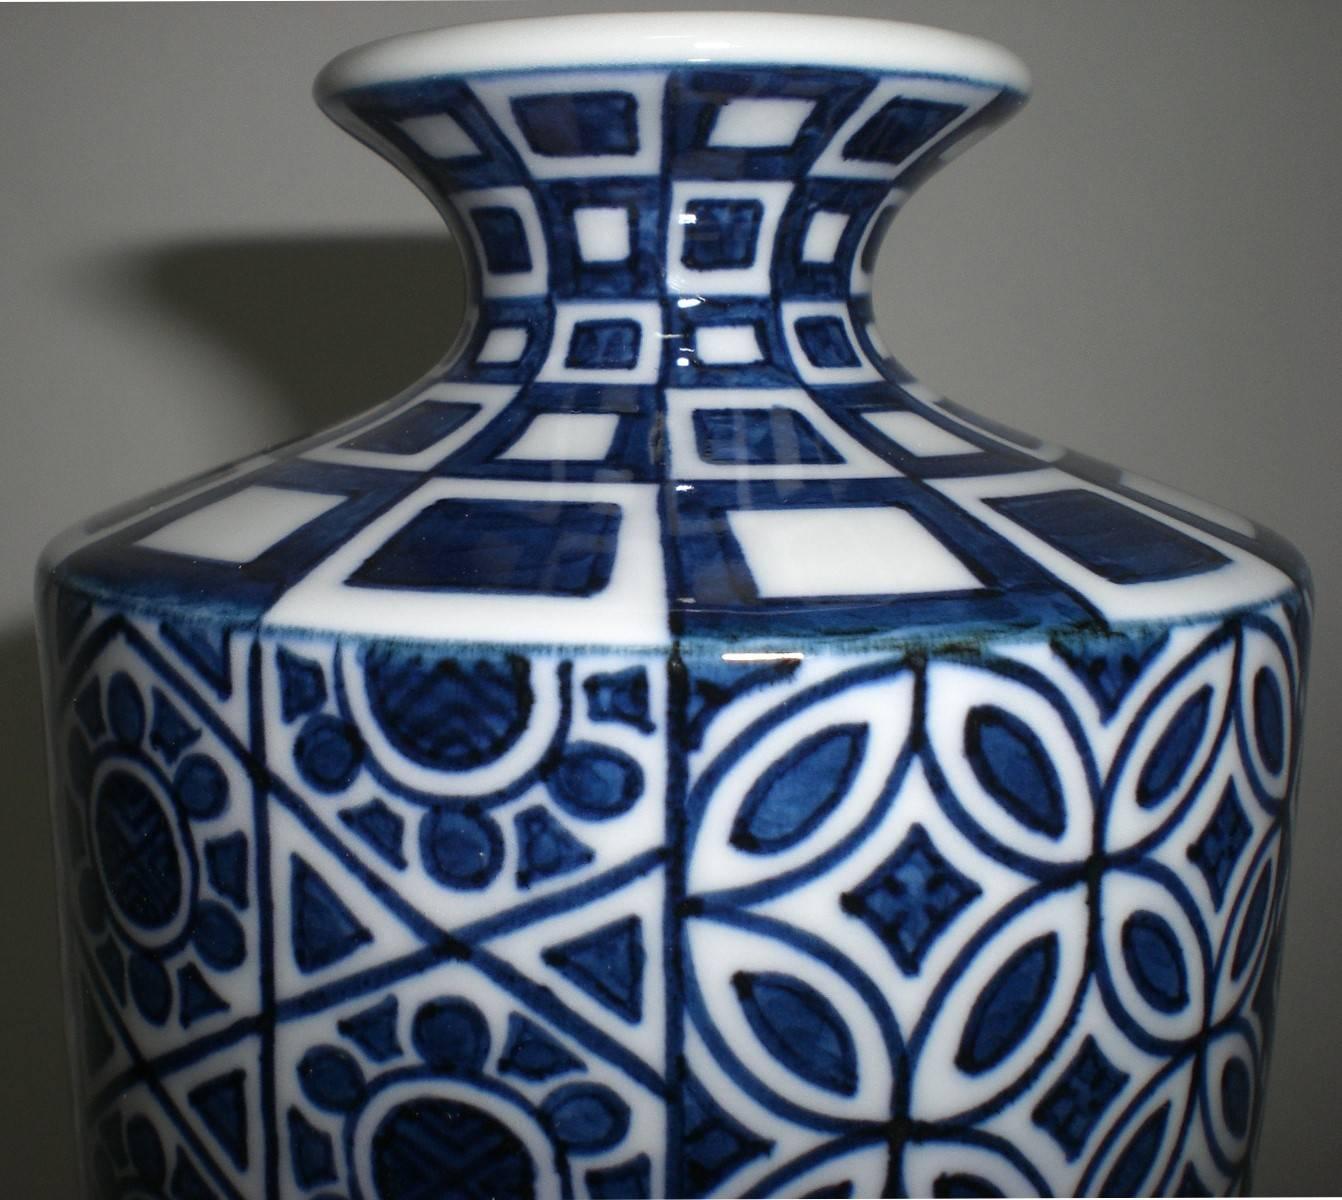 Japanese Contemporary Decorative Blue Porcelain Vase by Genki Kunihiko